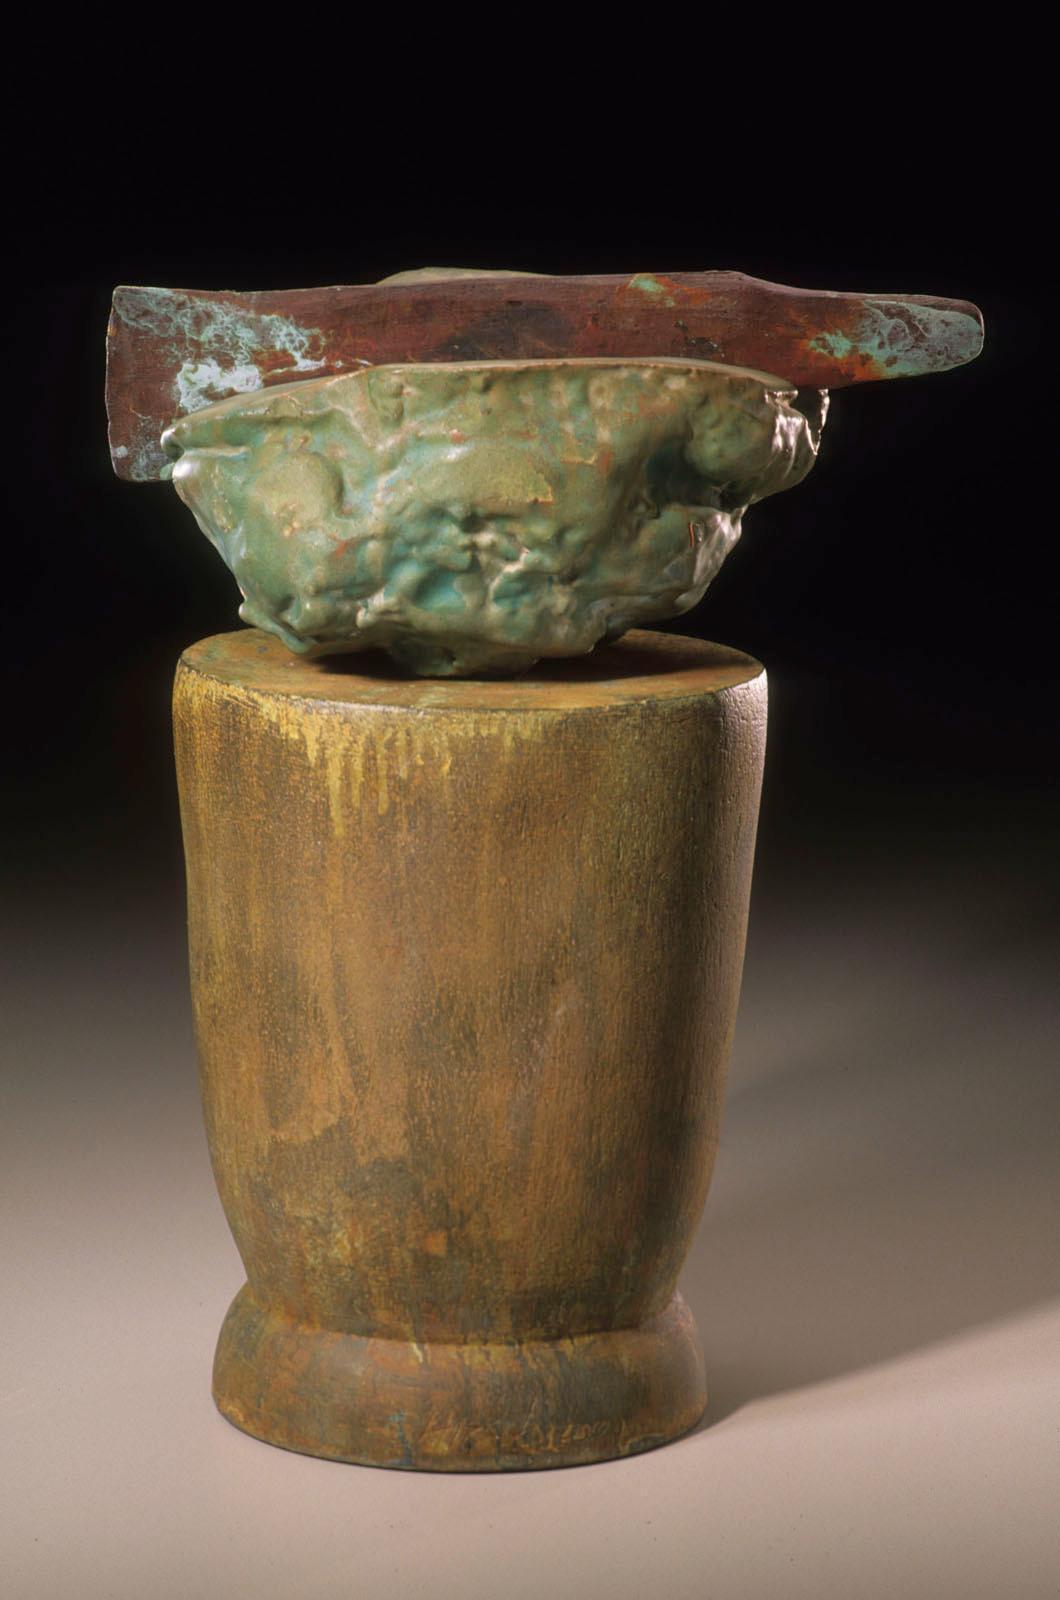 Modern Richard Hirsch Ceramic Altar Bowl with Weapon Sculpture, 2000 For Sale